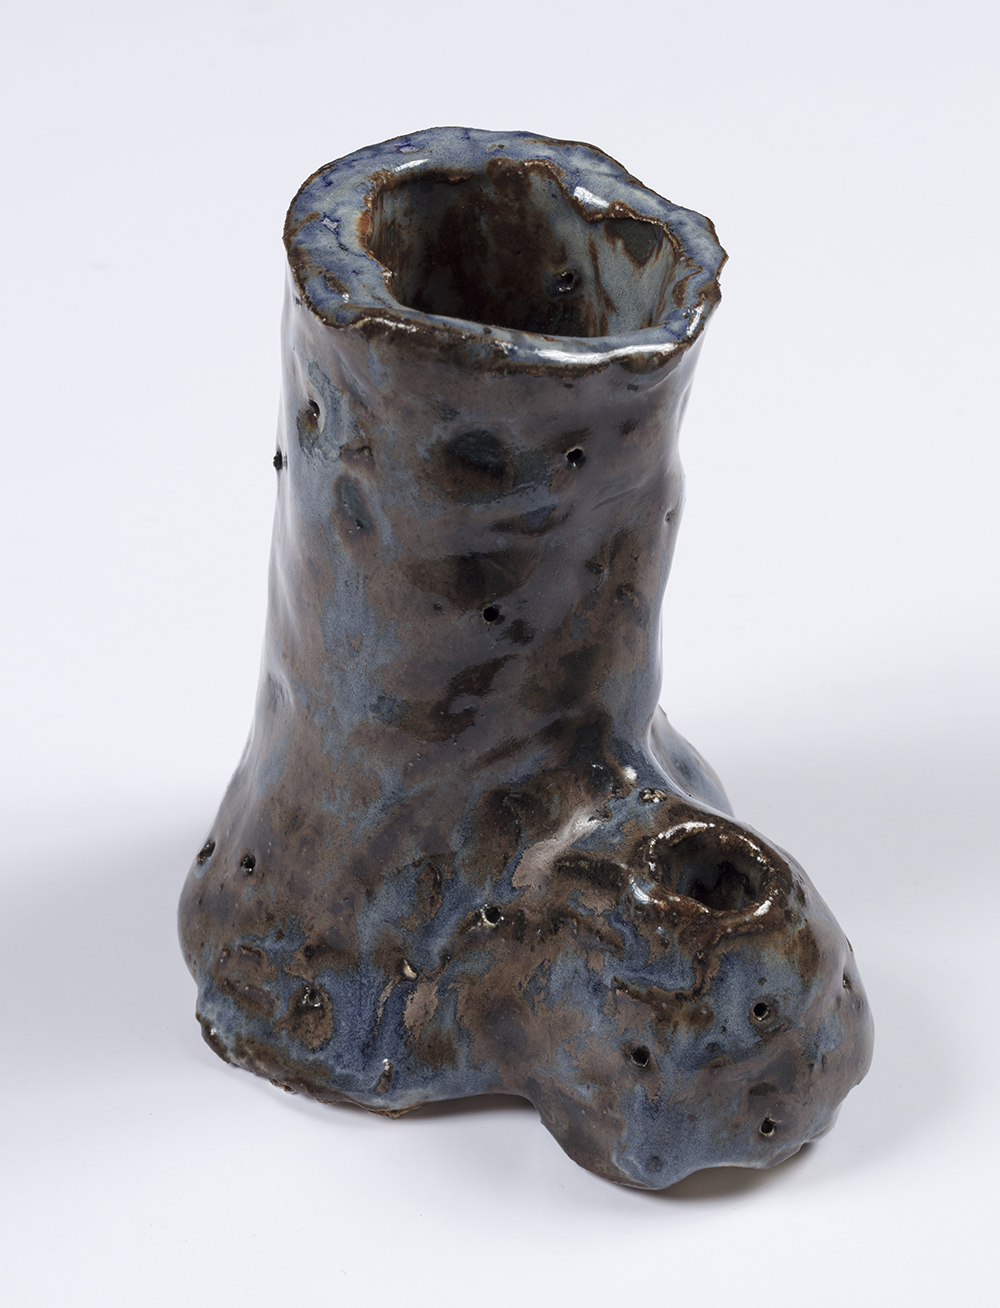 Kevin McNamee-Tweed.<em> Friend</em>, 2019. Glazed ceramic, 4 x 3 1/4 x 3 3/4 inches (10.2 x 8.3 x 9.5 cm)